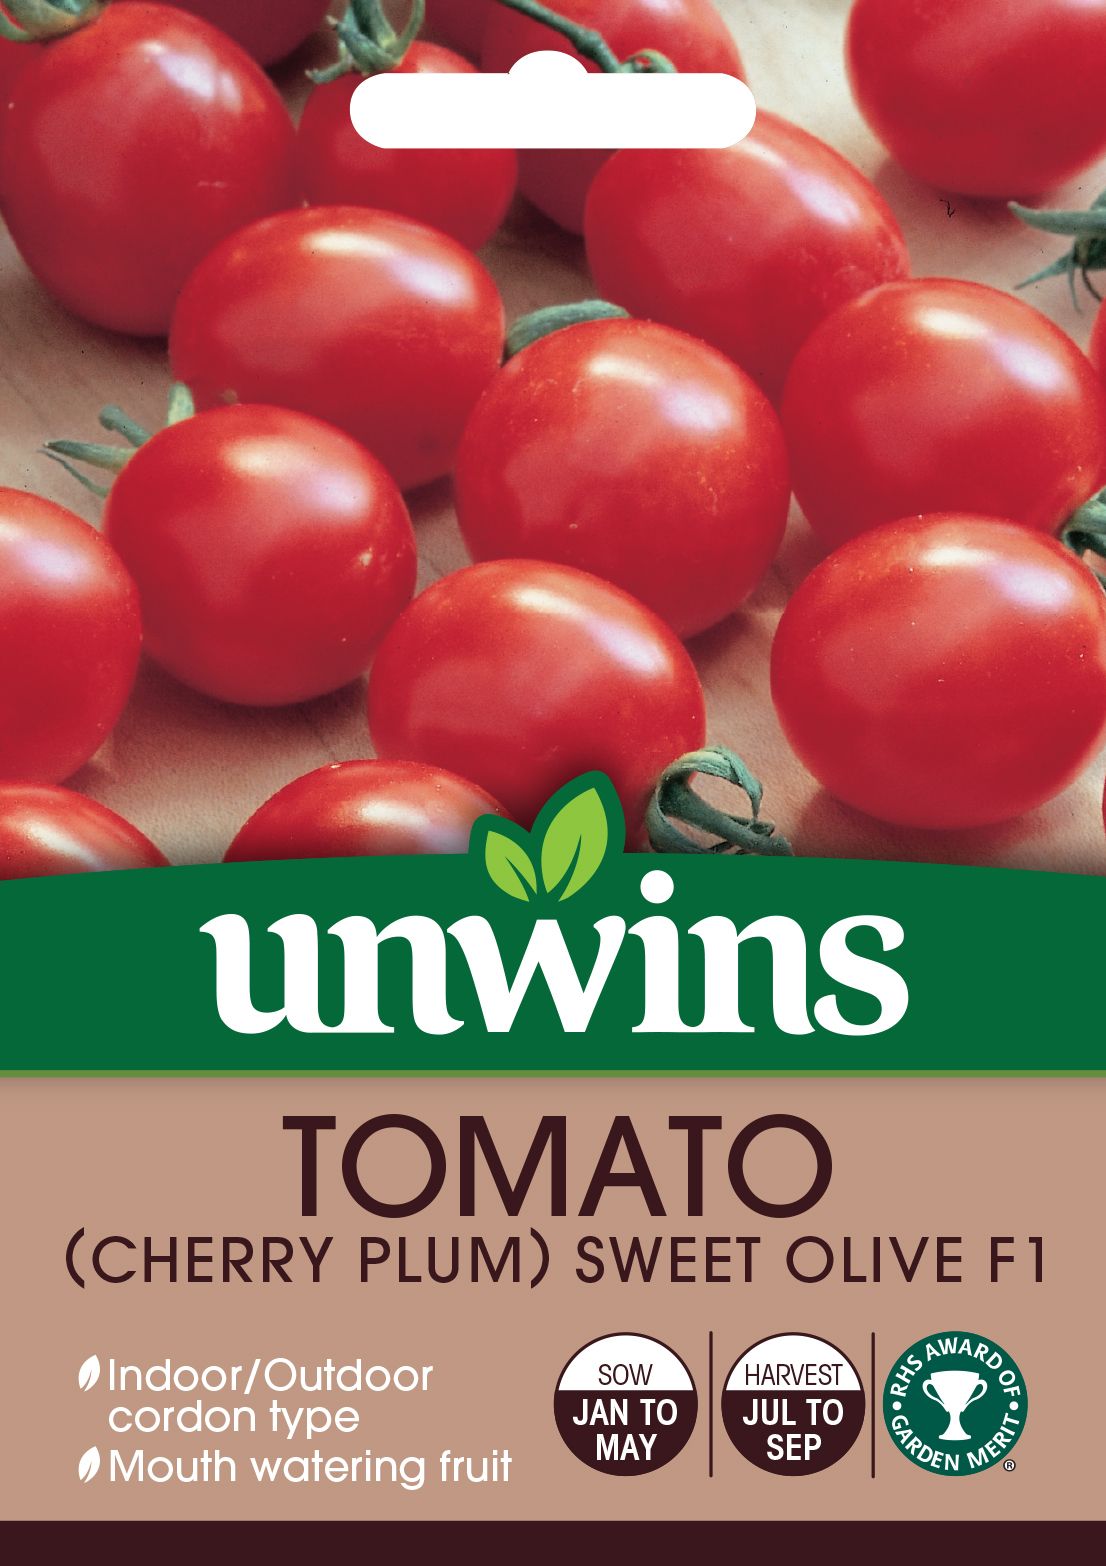 Tomato (Cherry Plum) Sweet Olive F1